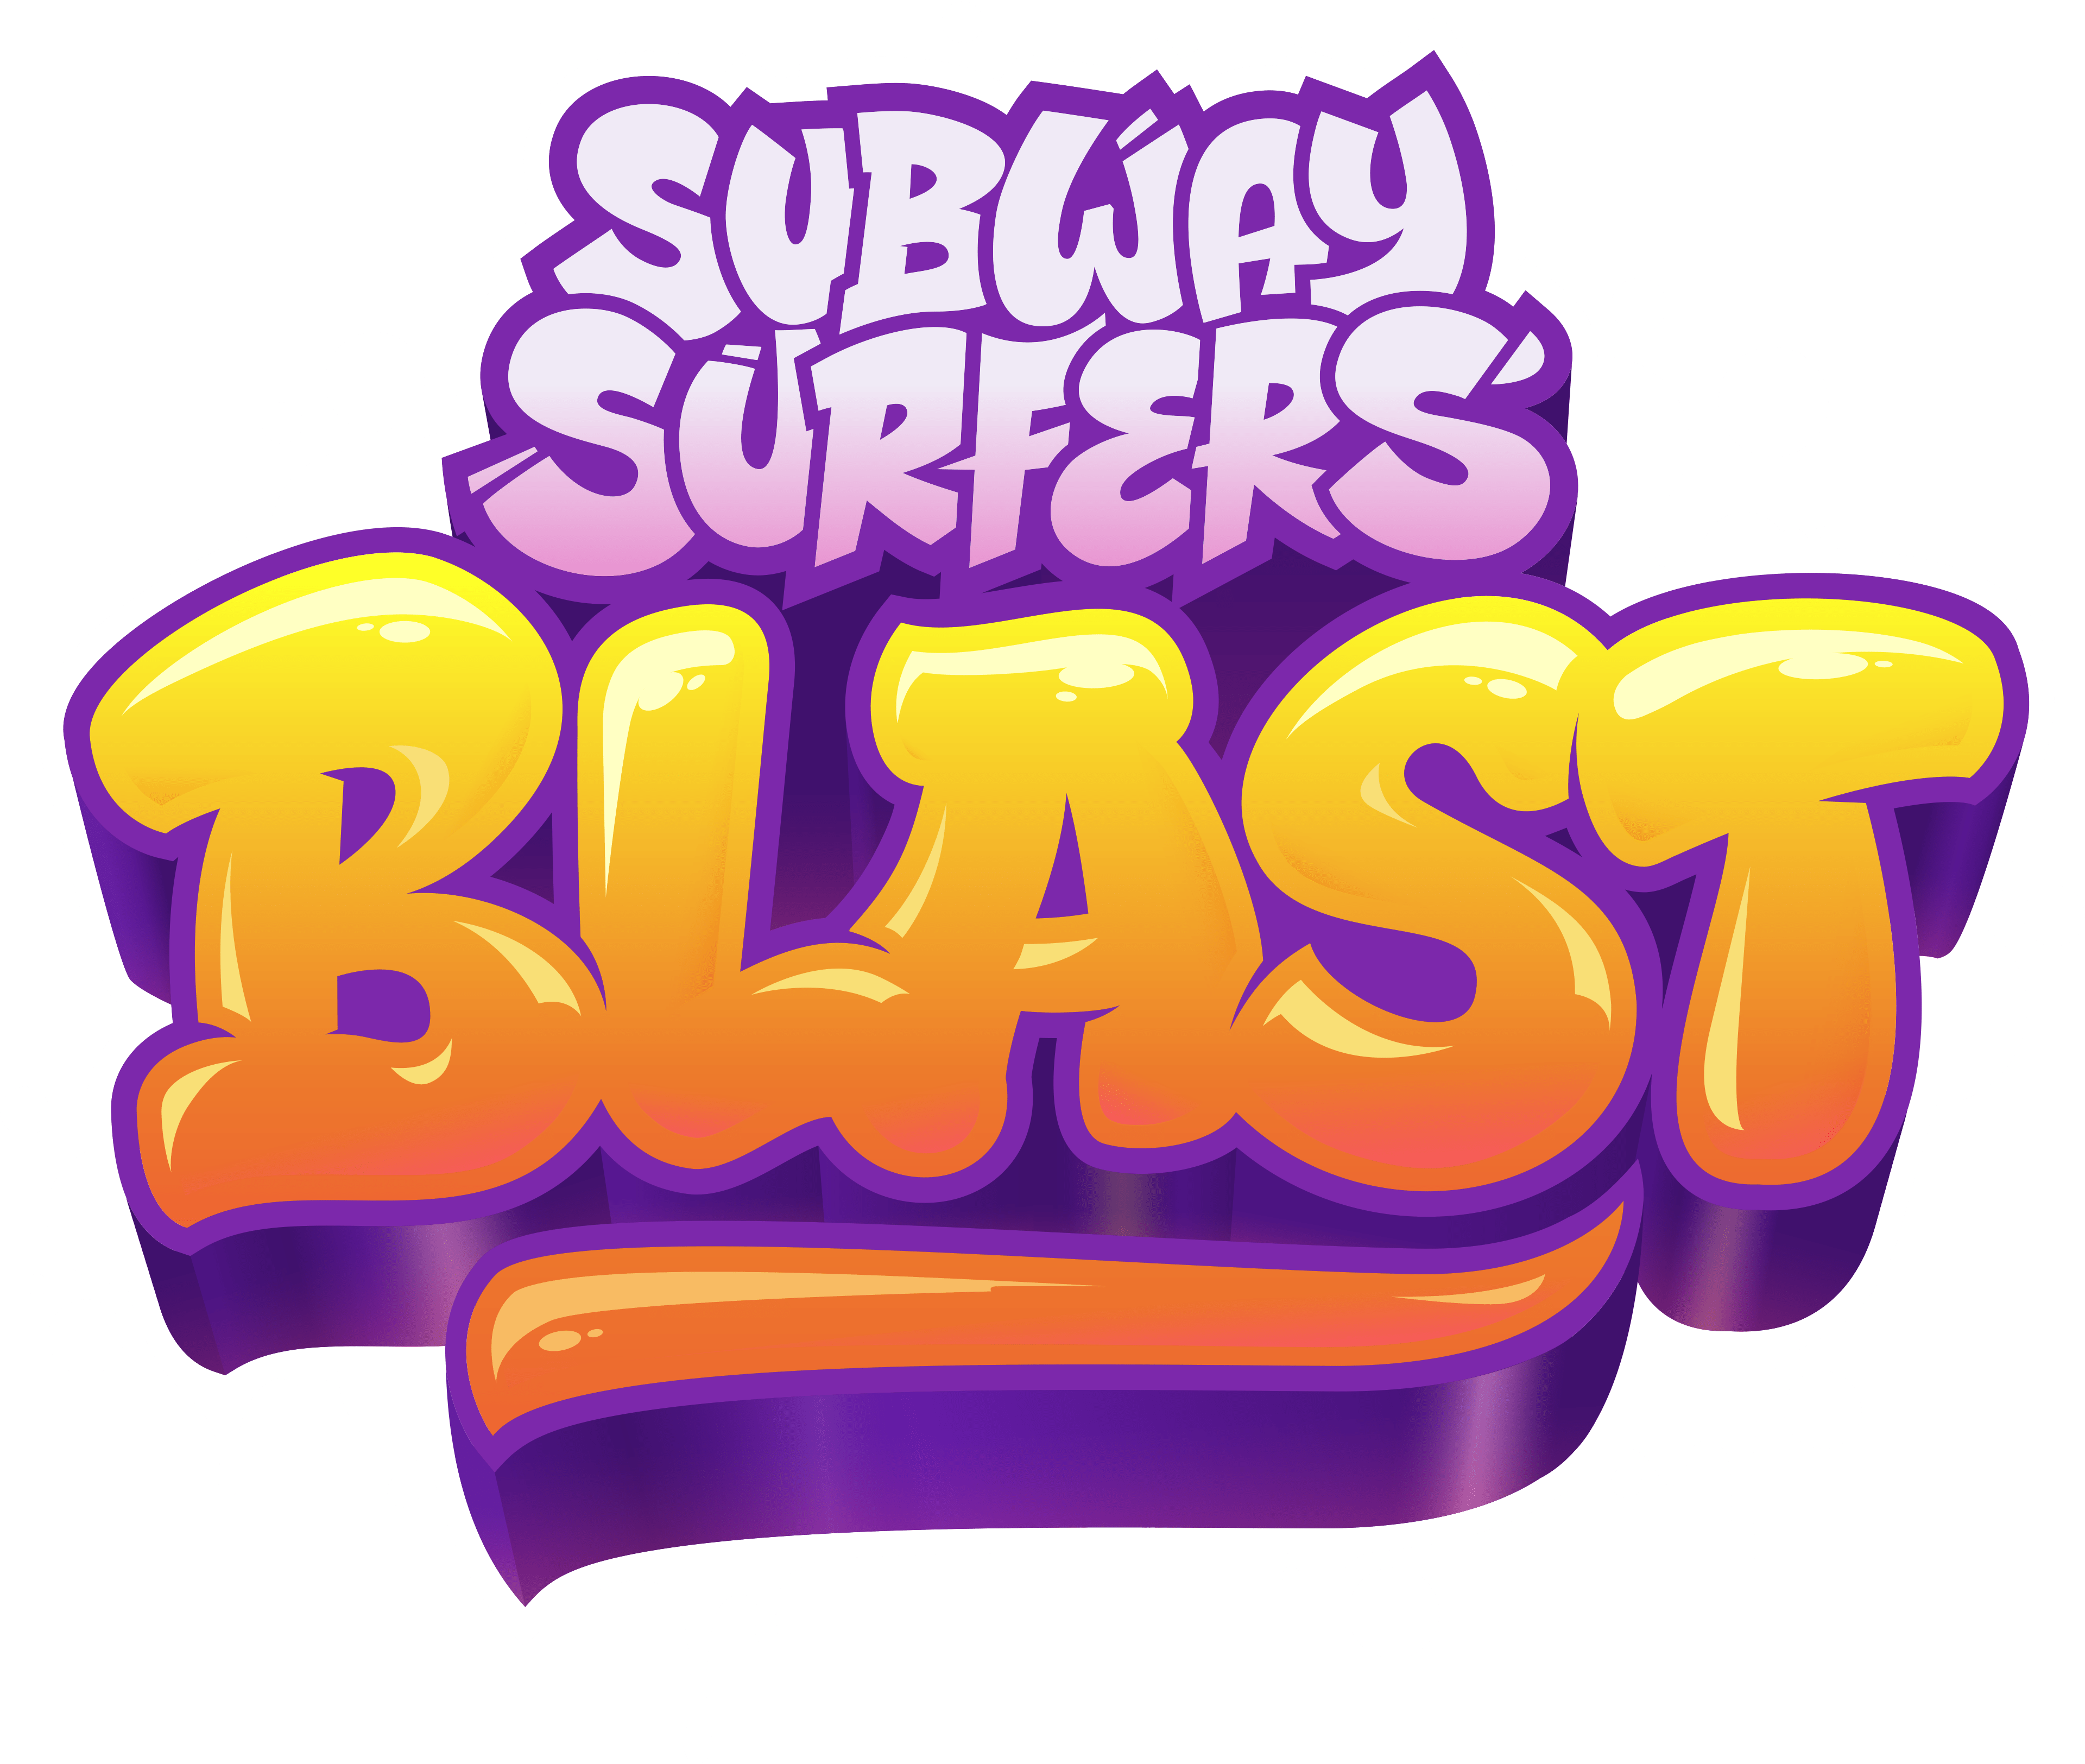 Subway Surfers Blast Launches Worldwide